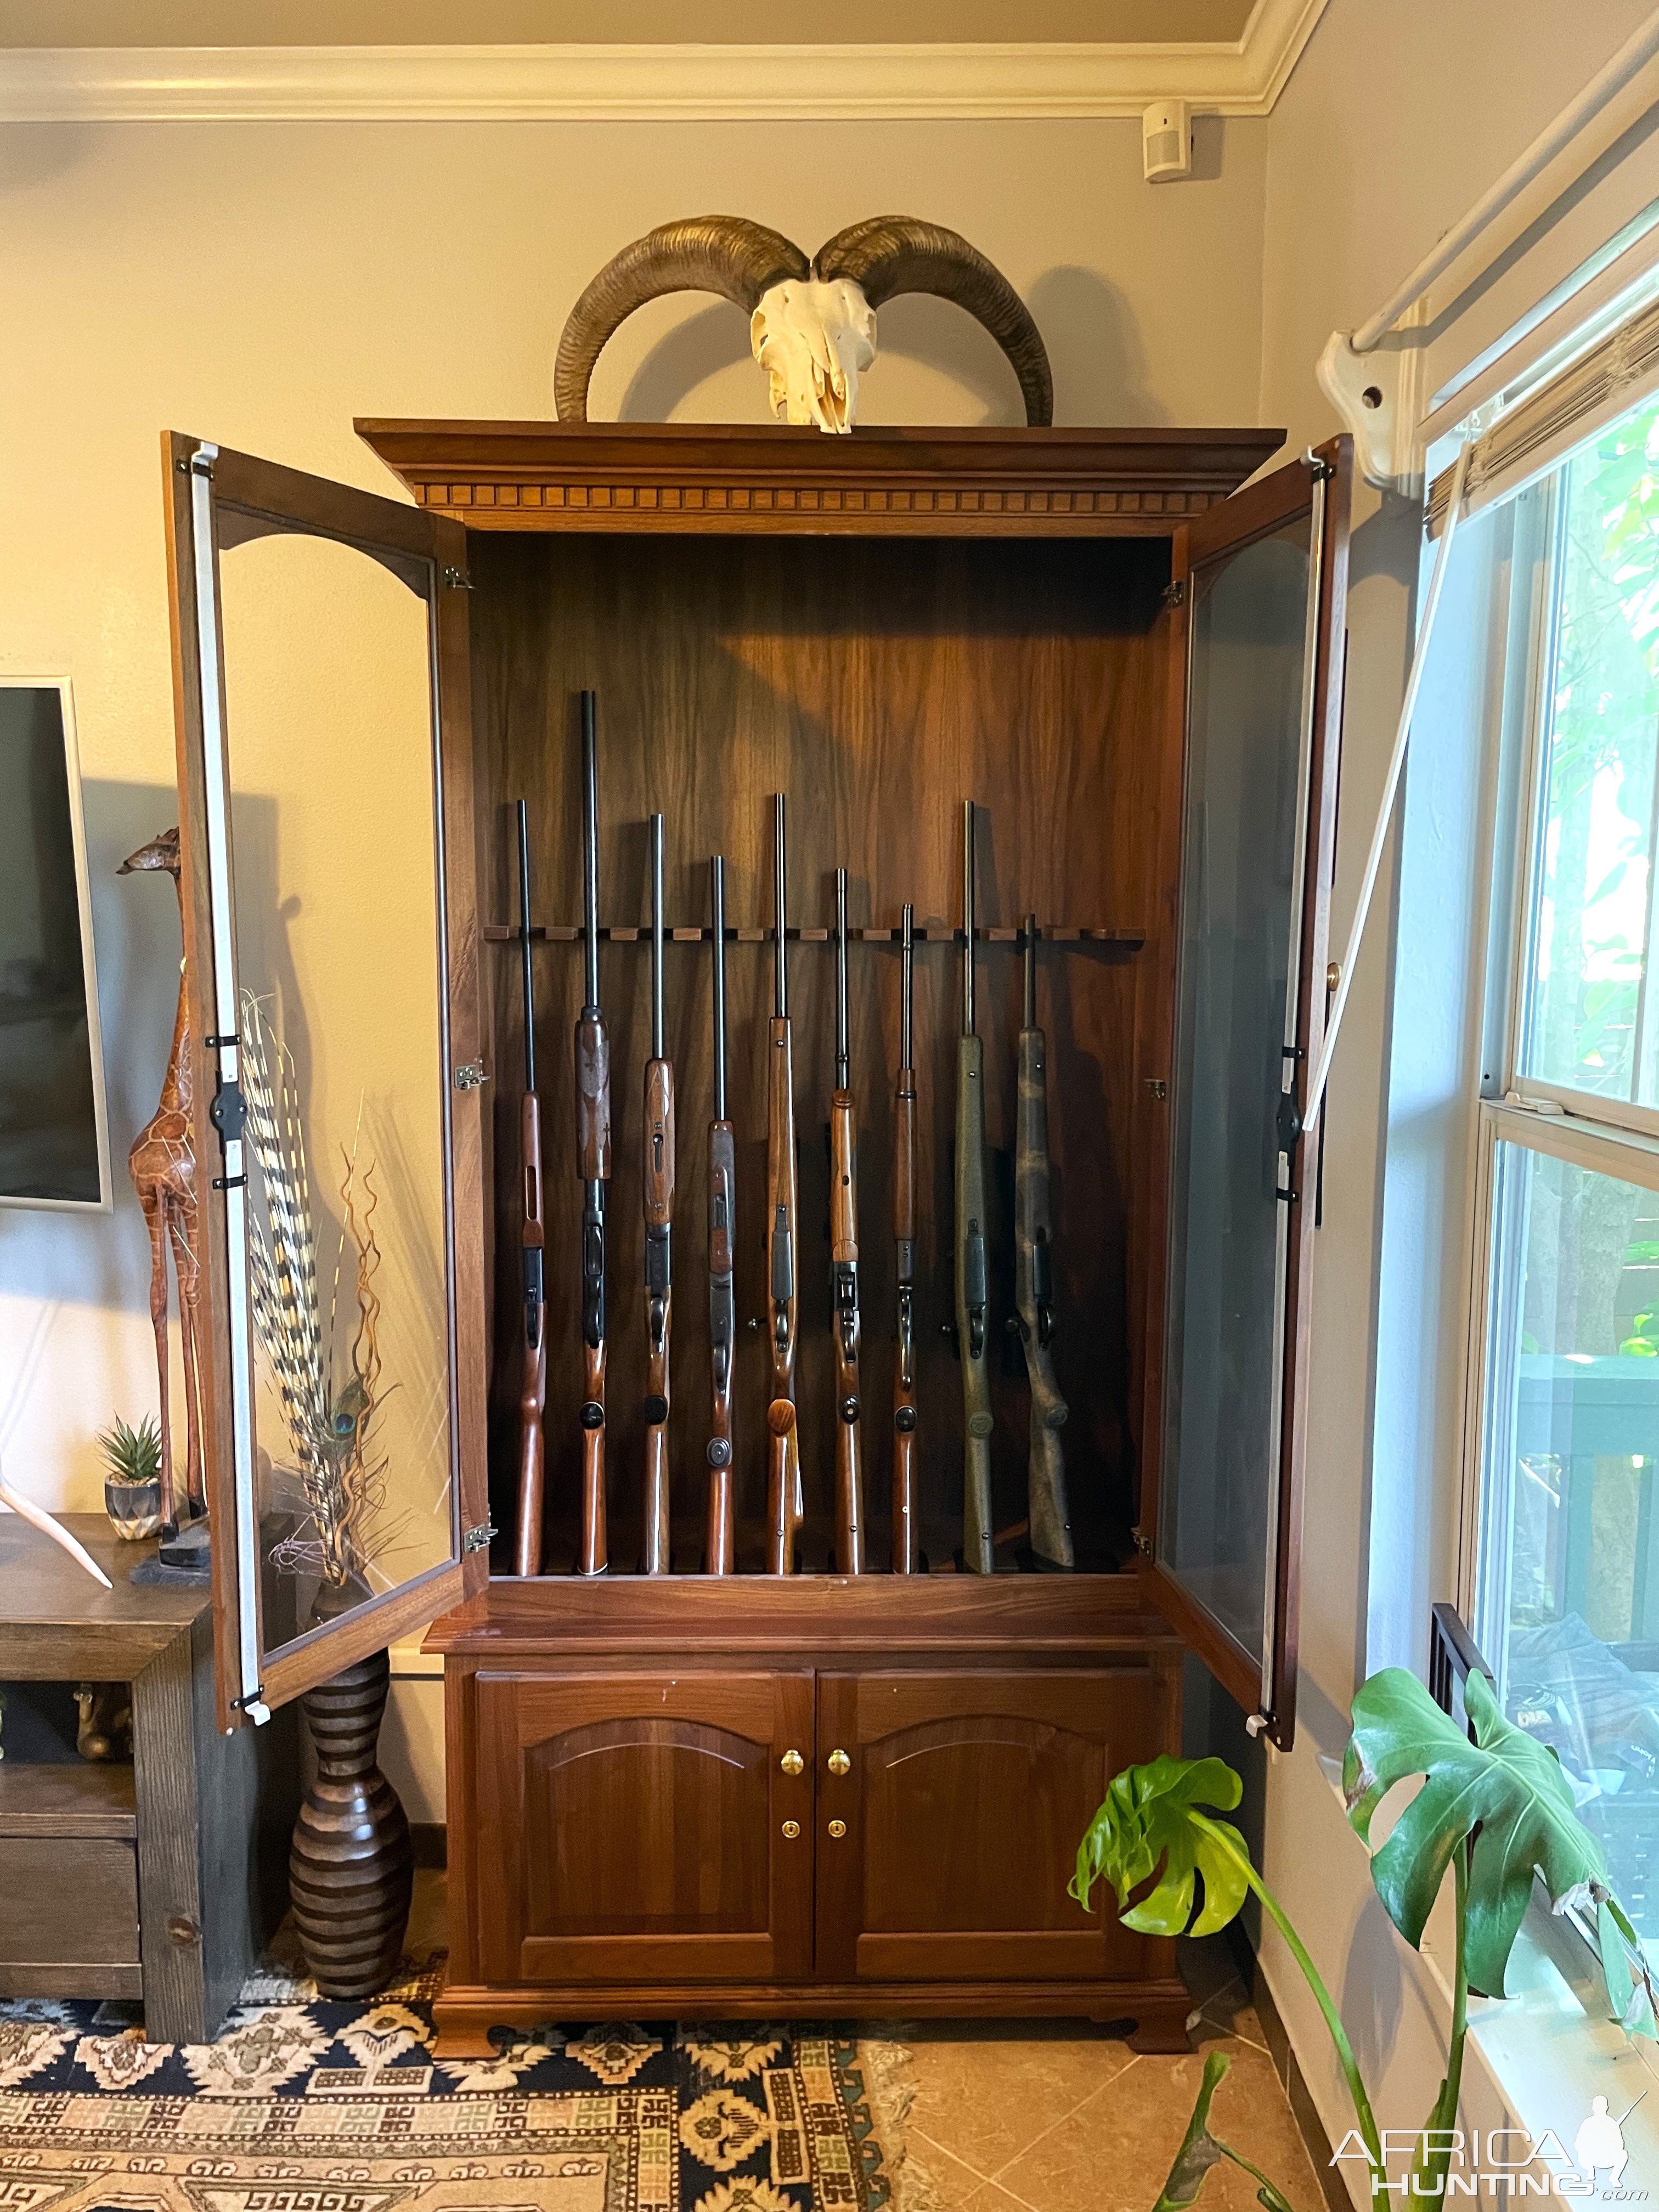 Rifle Display Cabinet